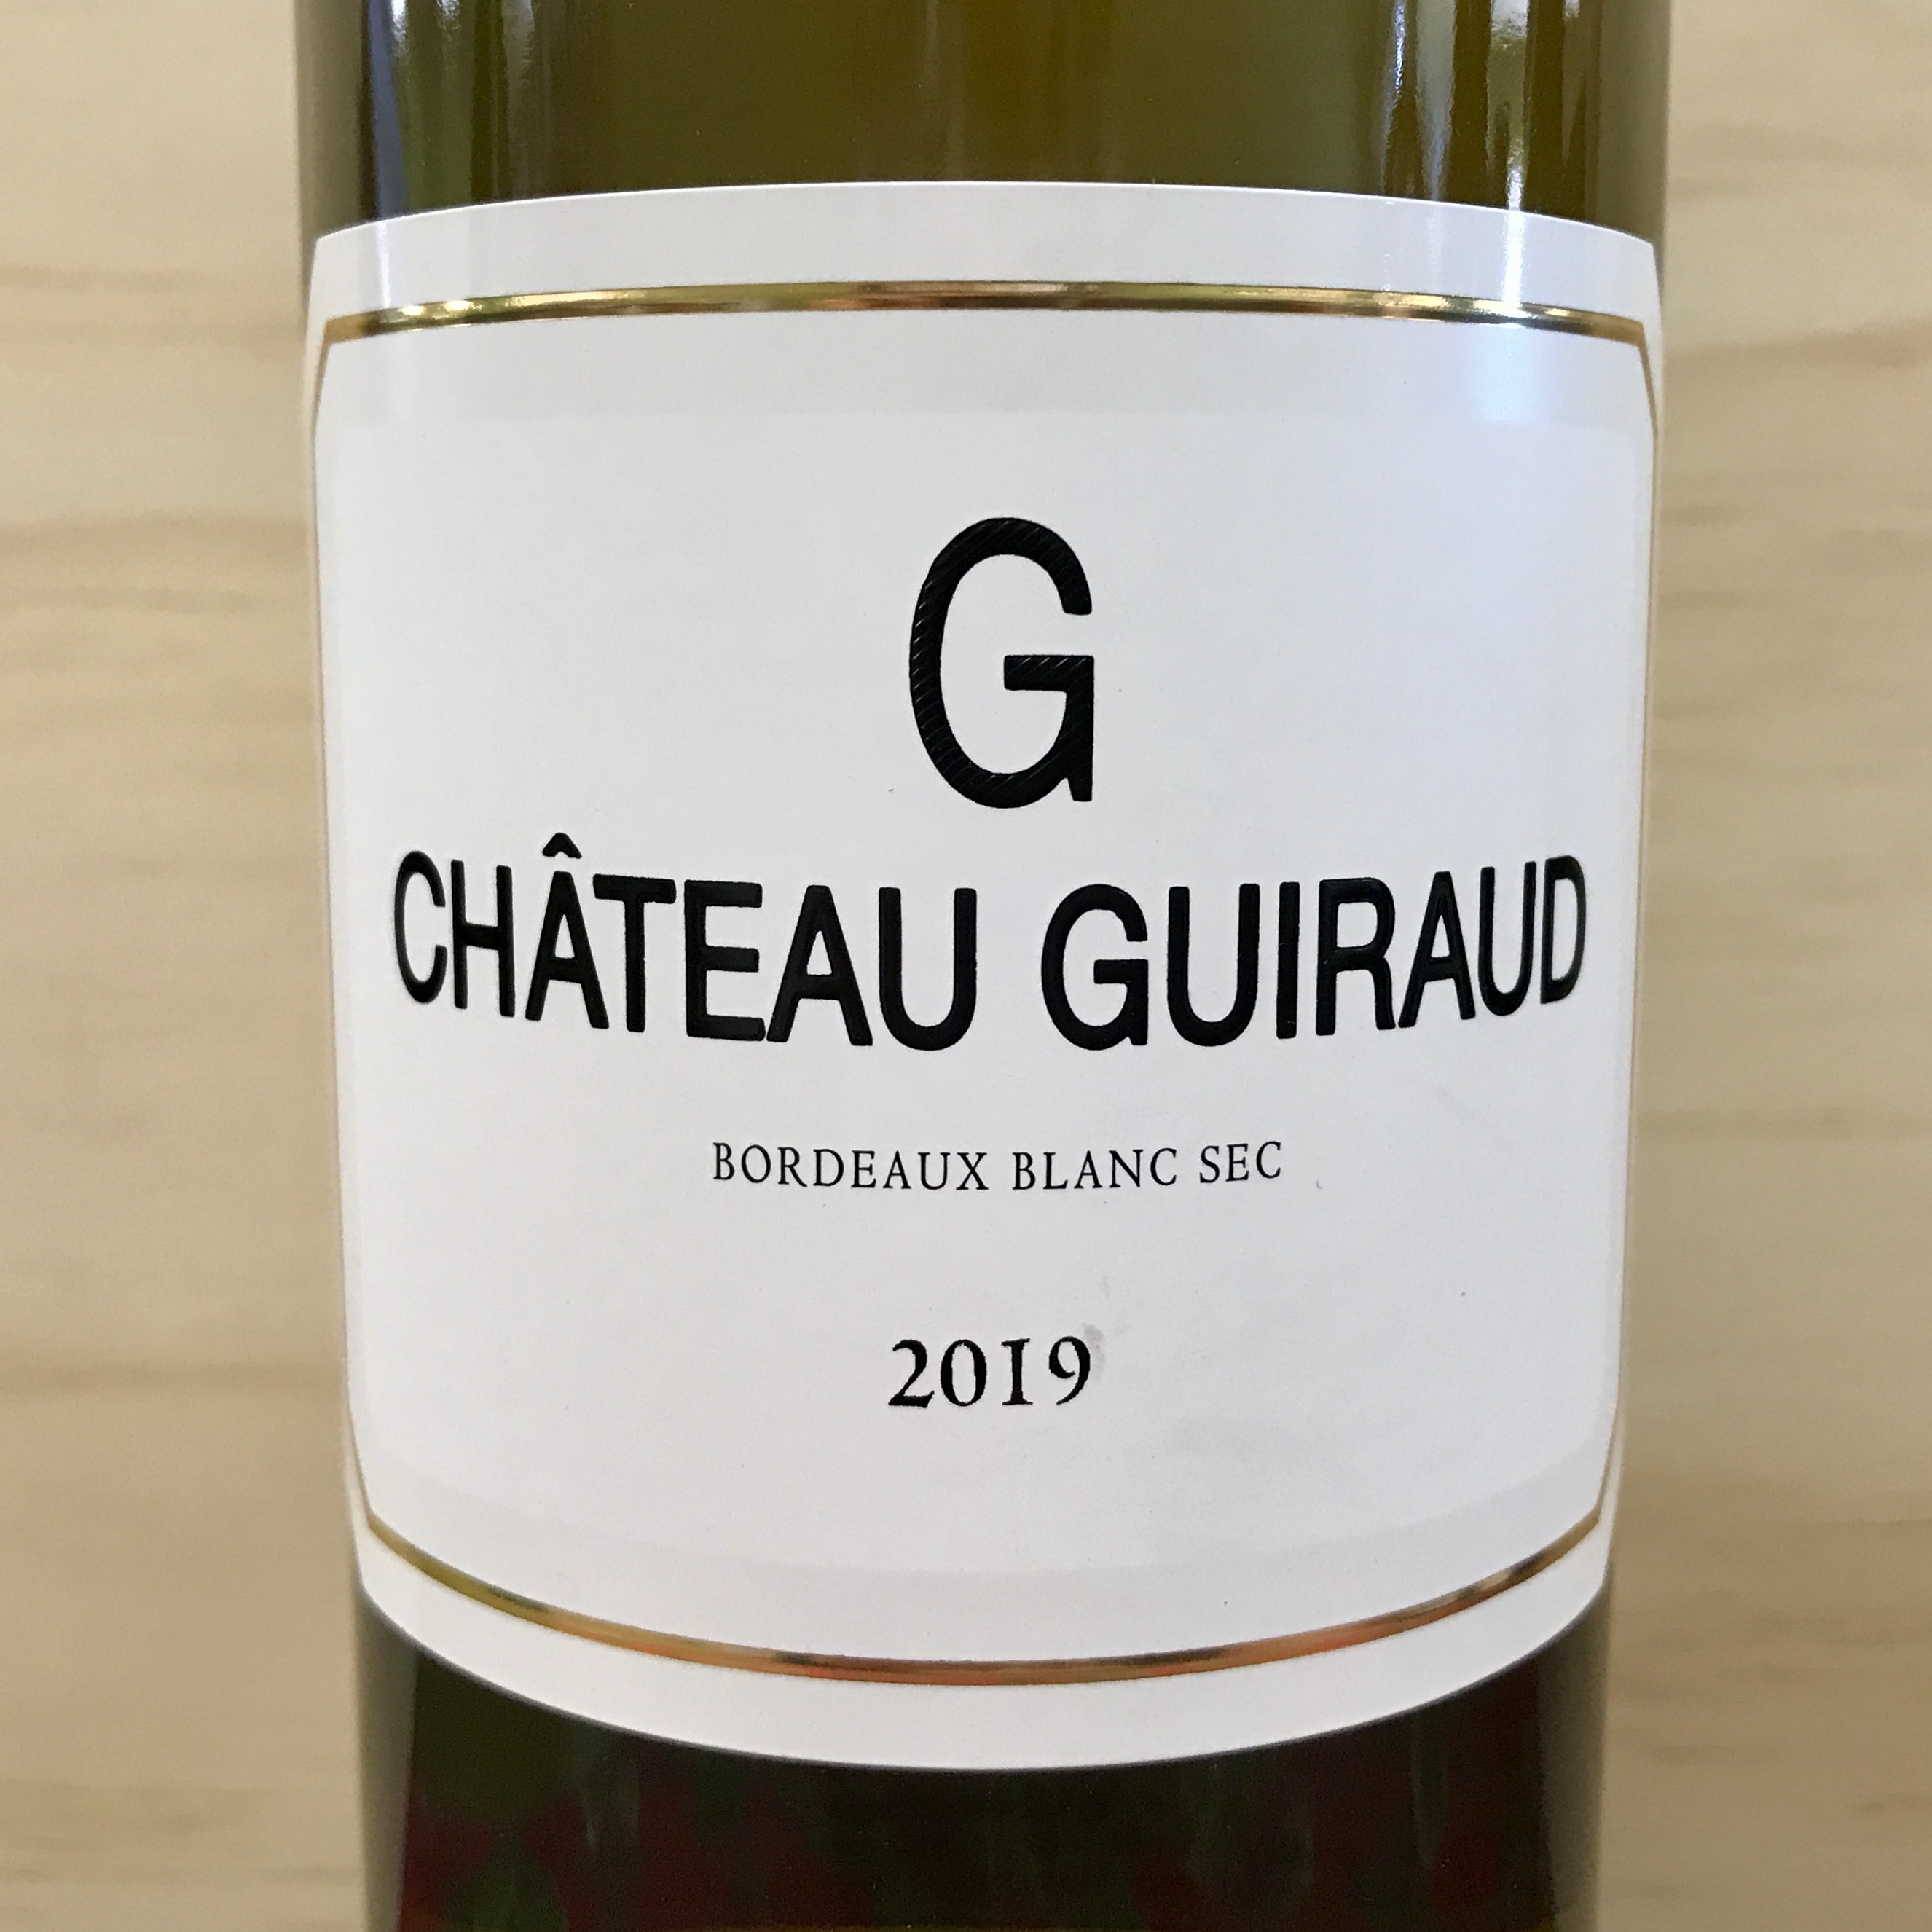 Chateau Guiraud "G" Bordeaux Blanc dry 2019